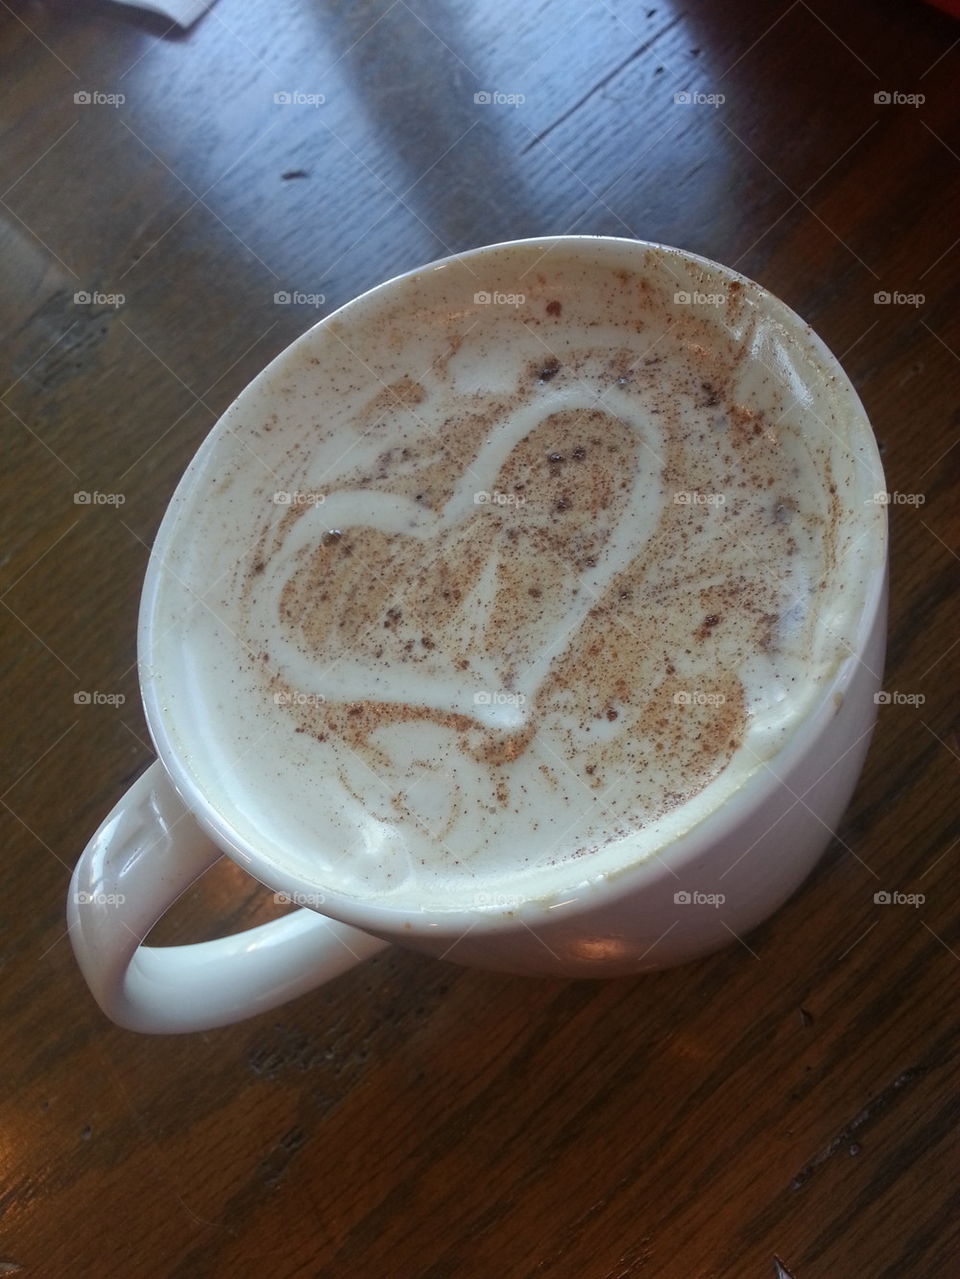 latte love